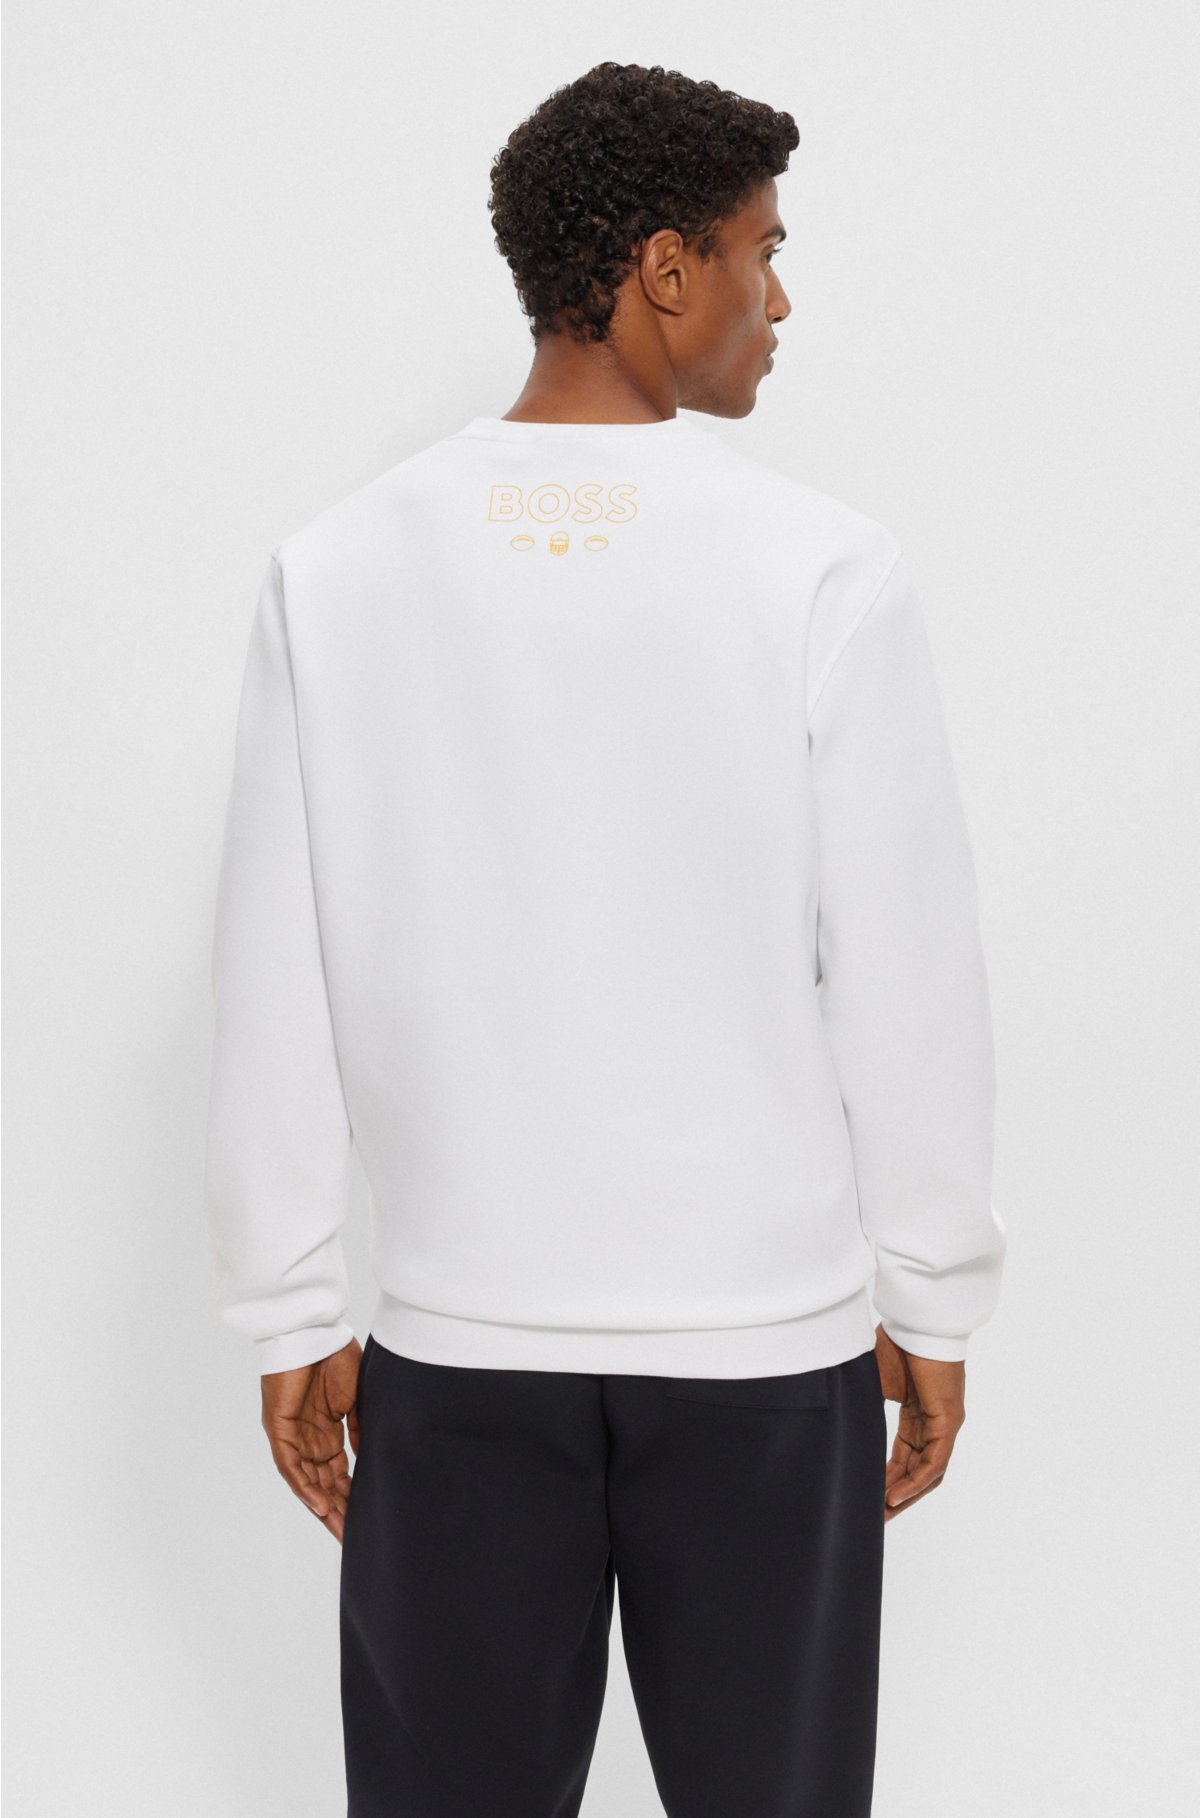 BOSS x NFL cotton-blend sweatshirt with collaborative branding, Steelers